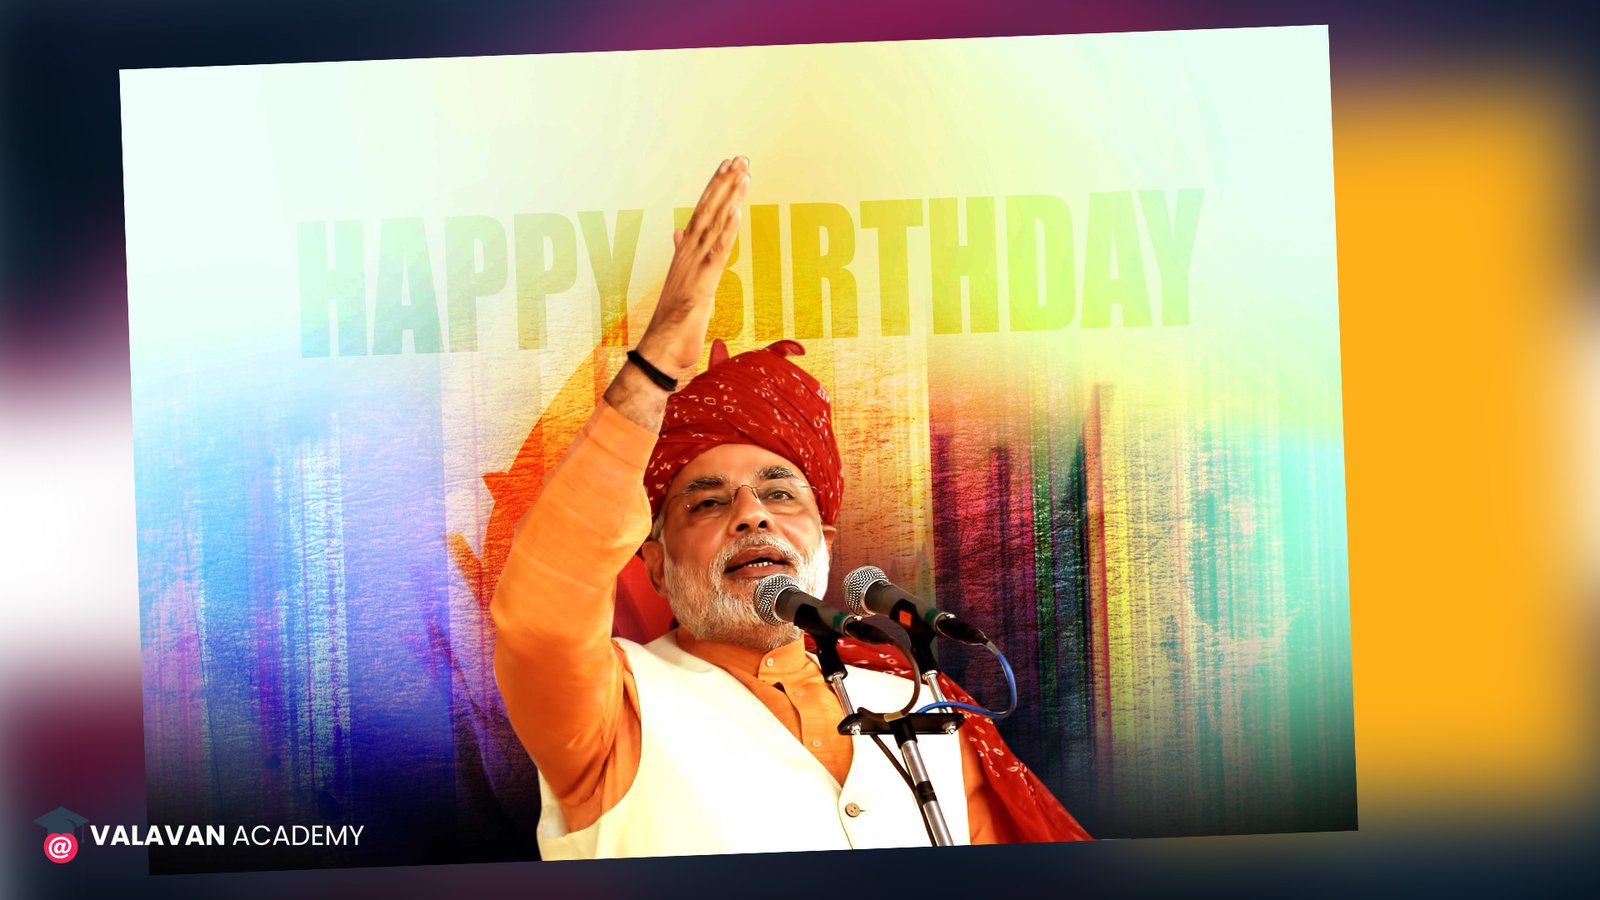 Narendra Modi Birthday Poster Free Download